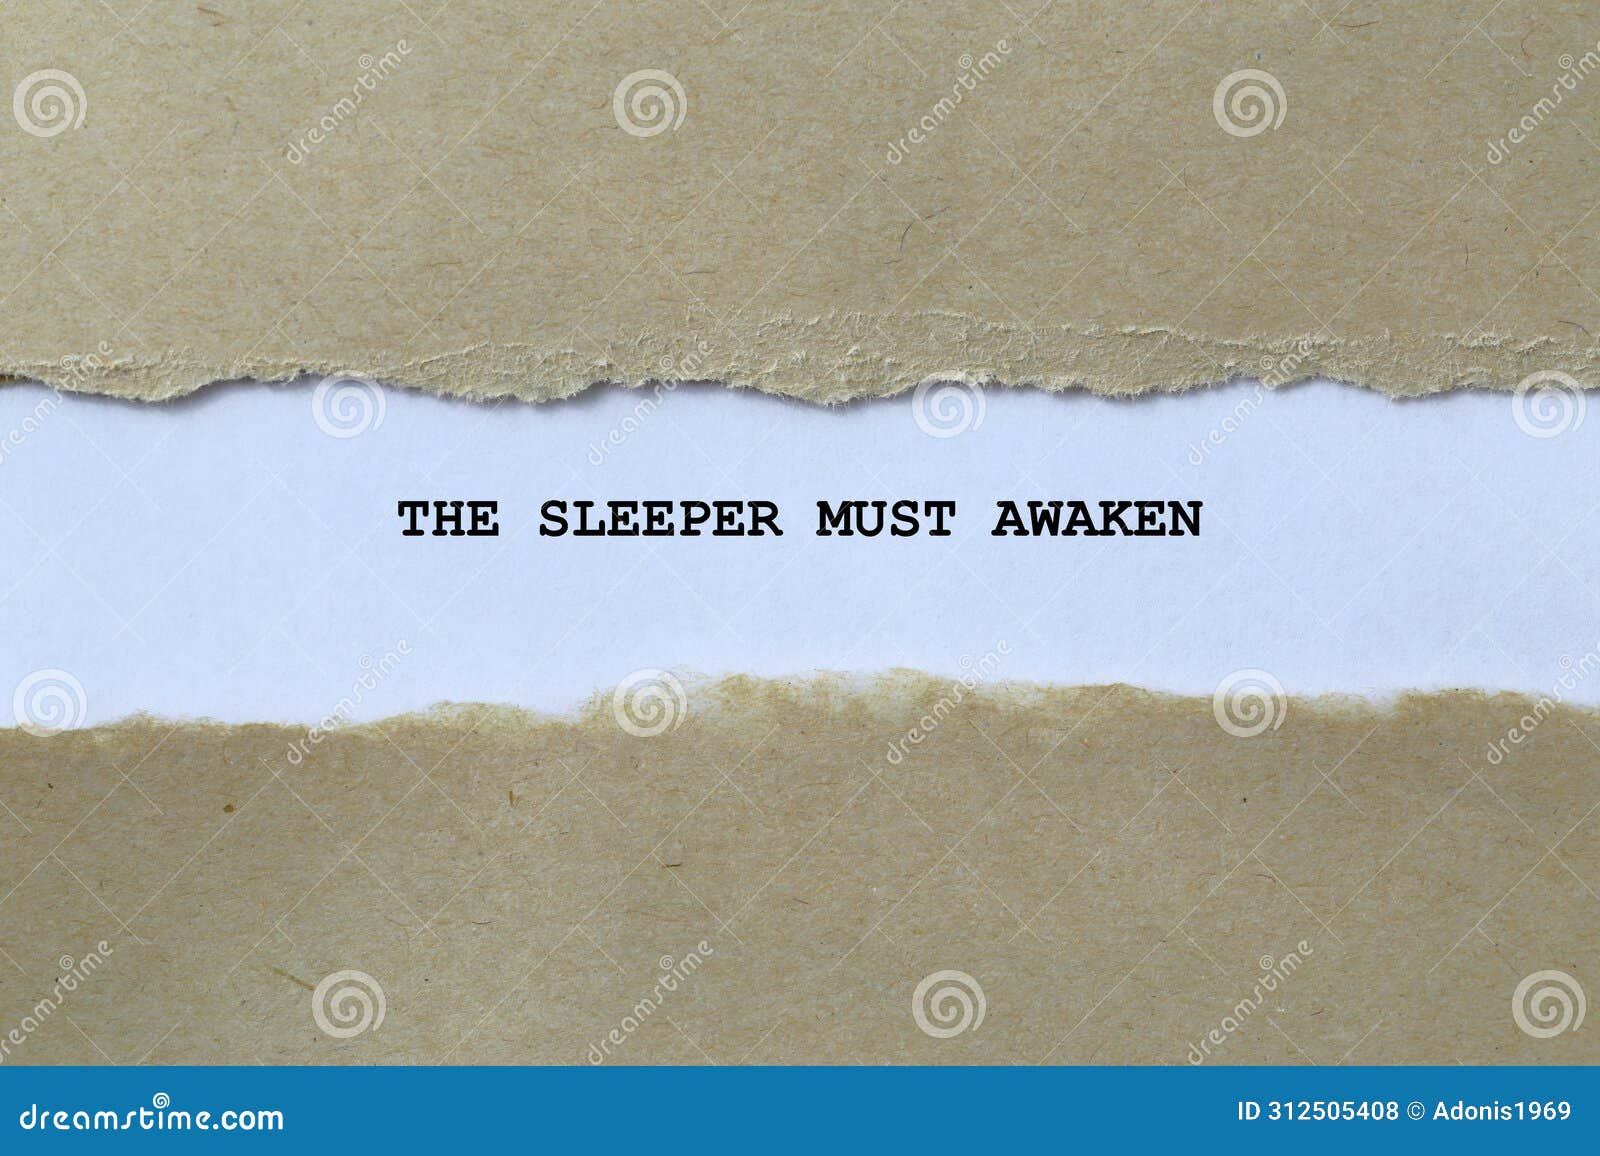 the sleeper must awaken on white paper